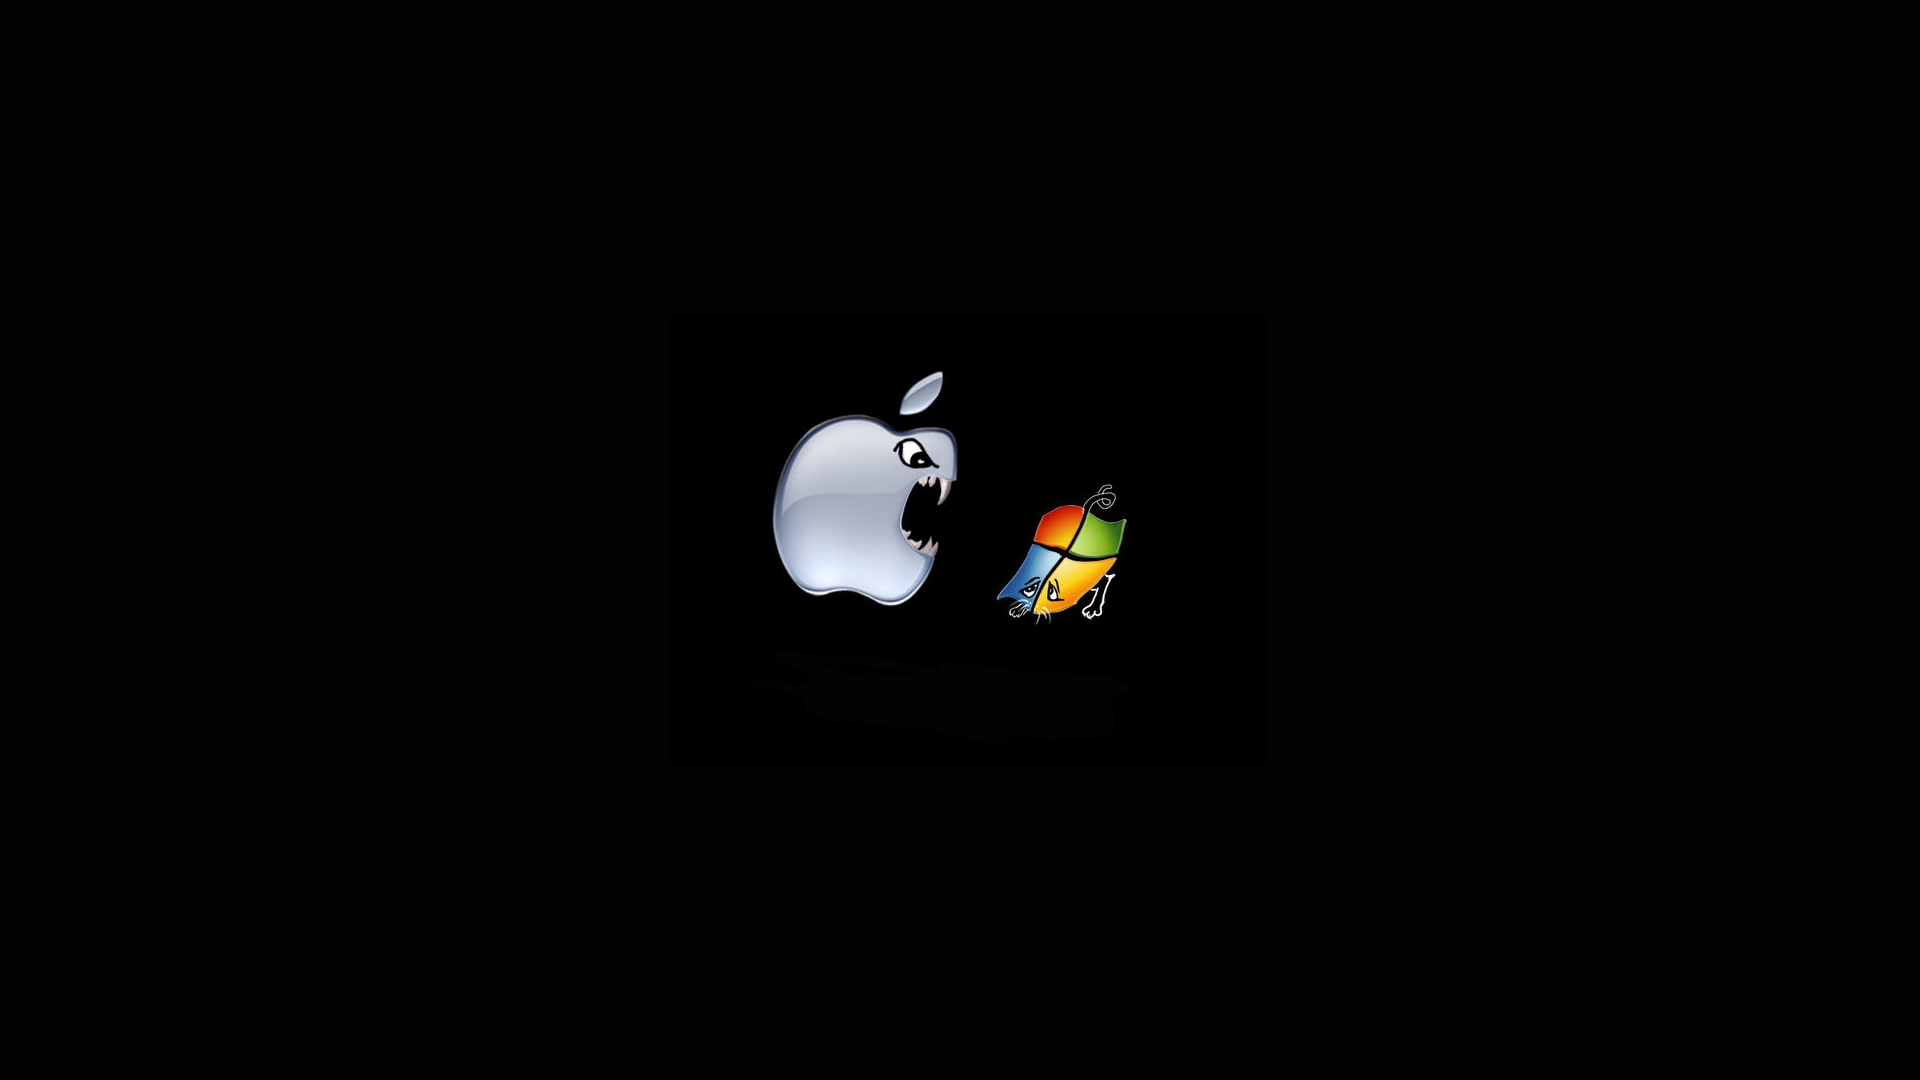 Apple vs Windows Images Wallpaper